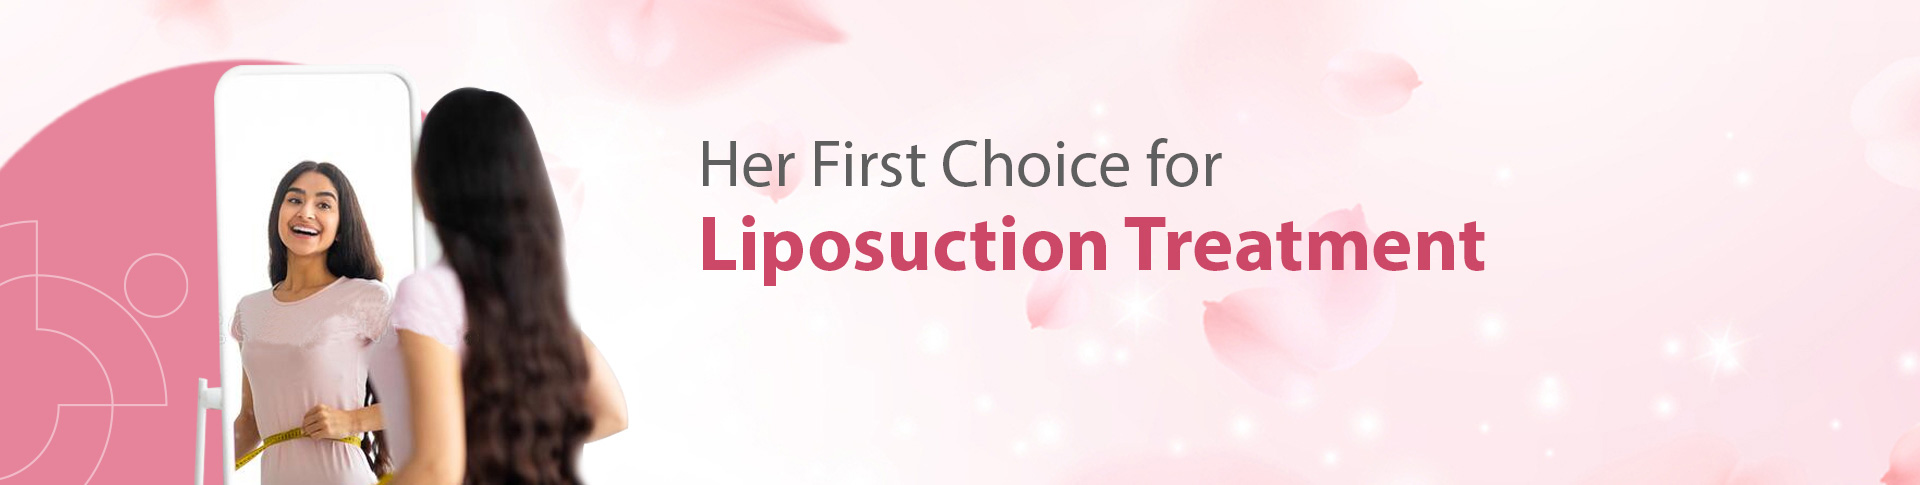 liposuction-treatment-banner